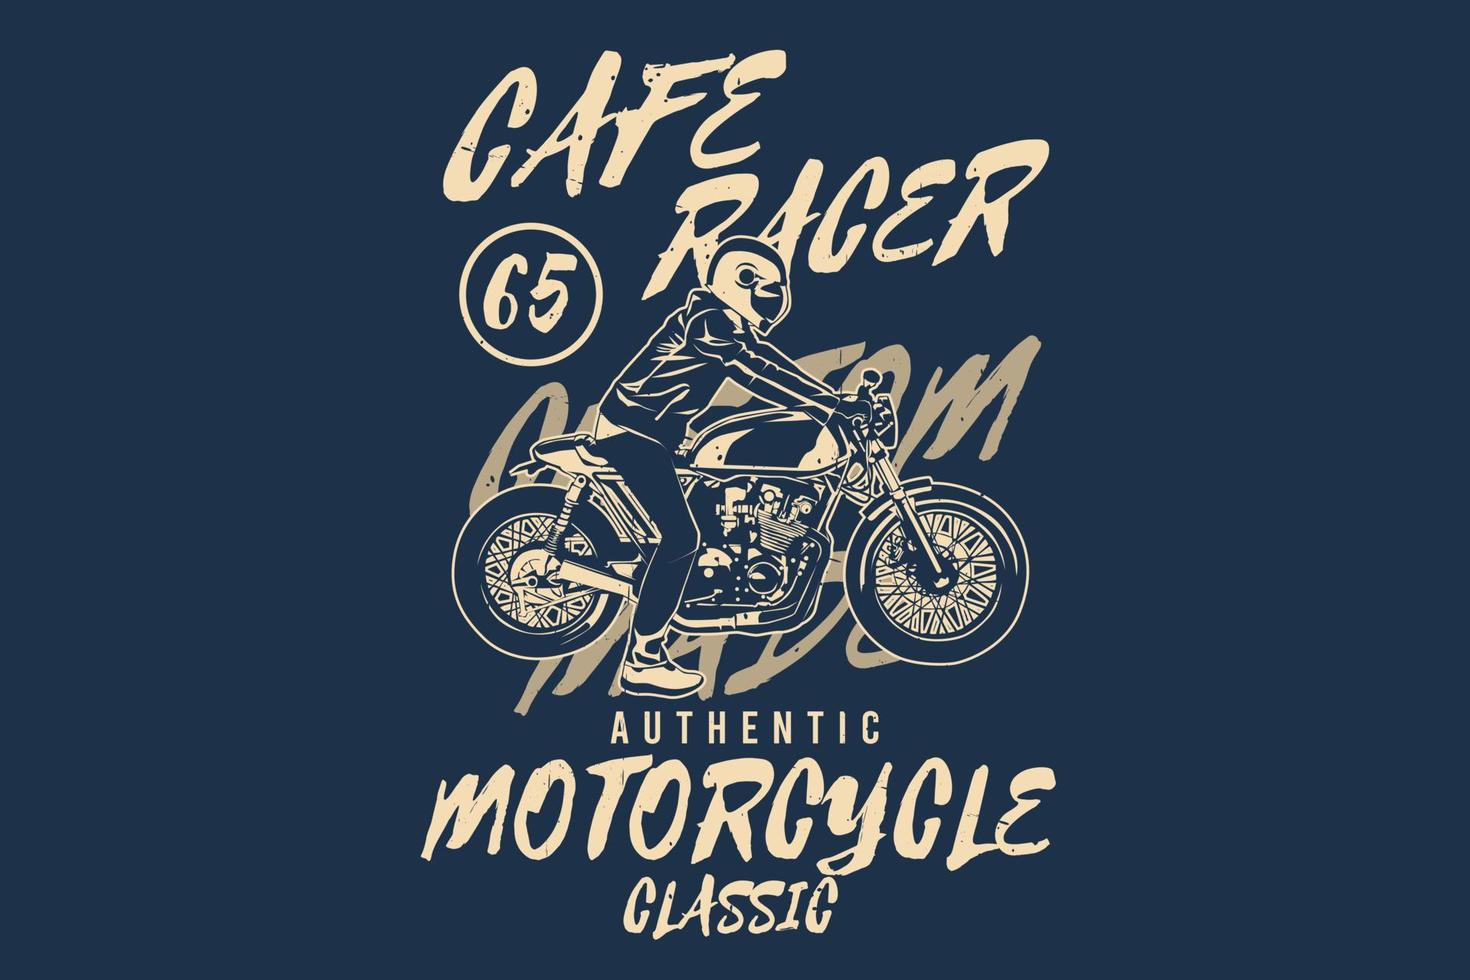 Cafe Racer authentisches Motorrad-Klassiker nach Maß Silhouette-Design vektor